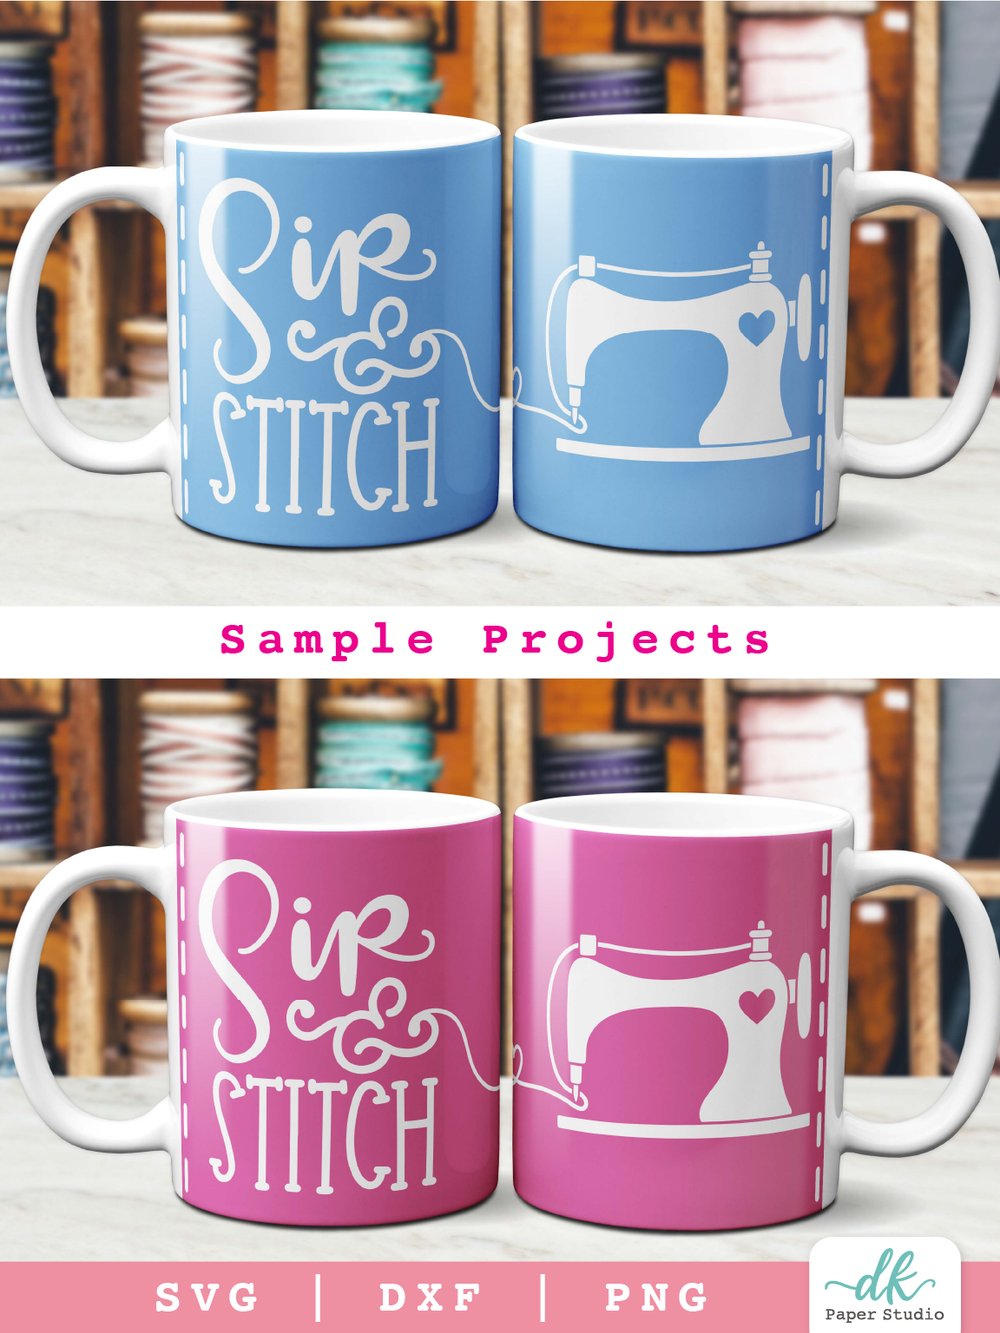 Christmas Mug Press, Candy Cane Mug SVG, Cricut Mug Press SVG, Mug Press  SVG Design, Holiday Mug, Mug Press Sublimation Png 